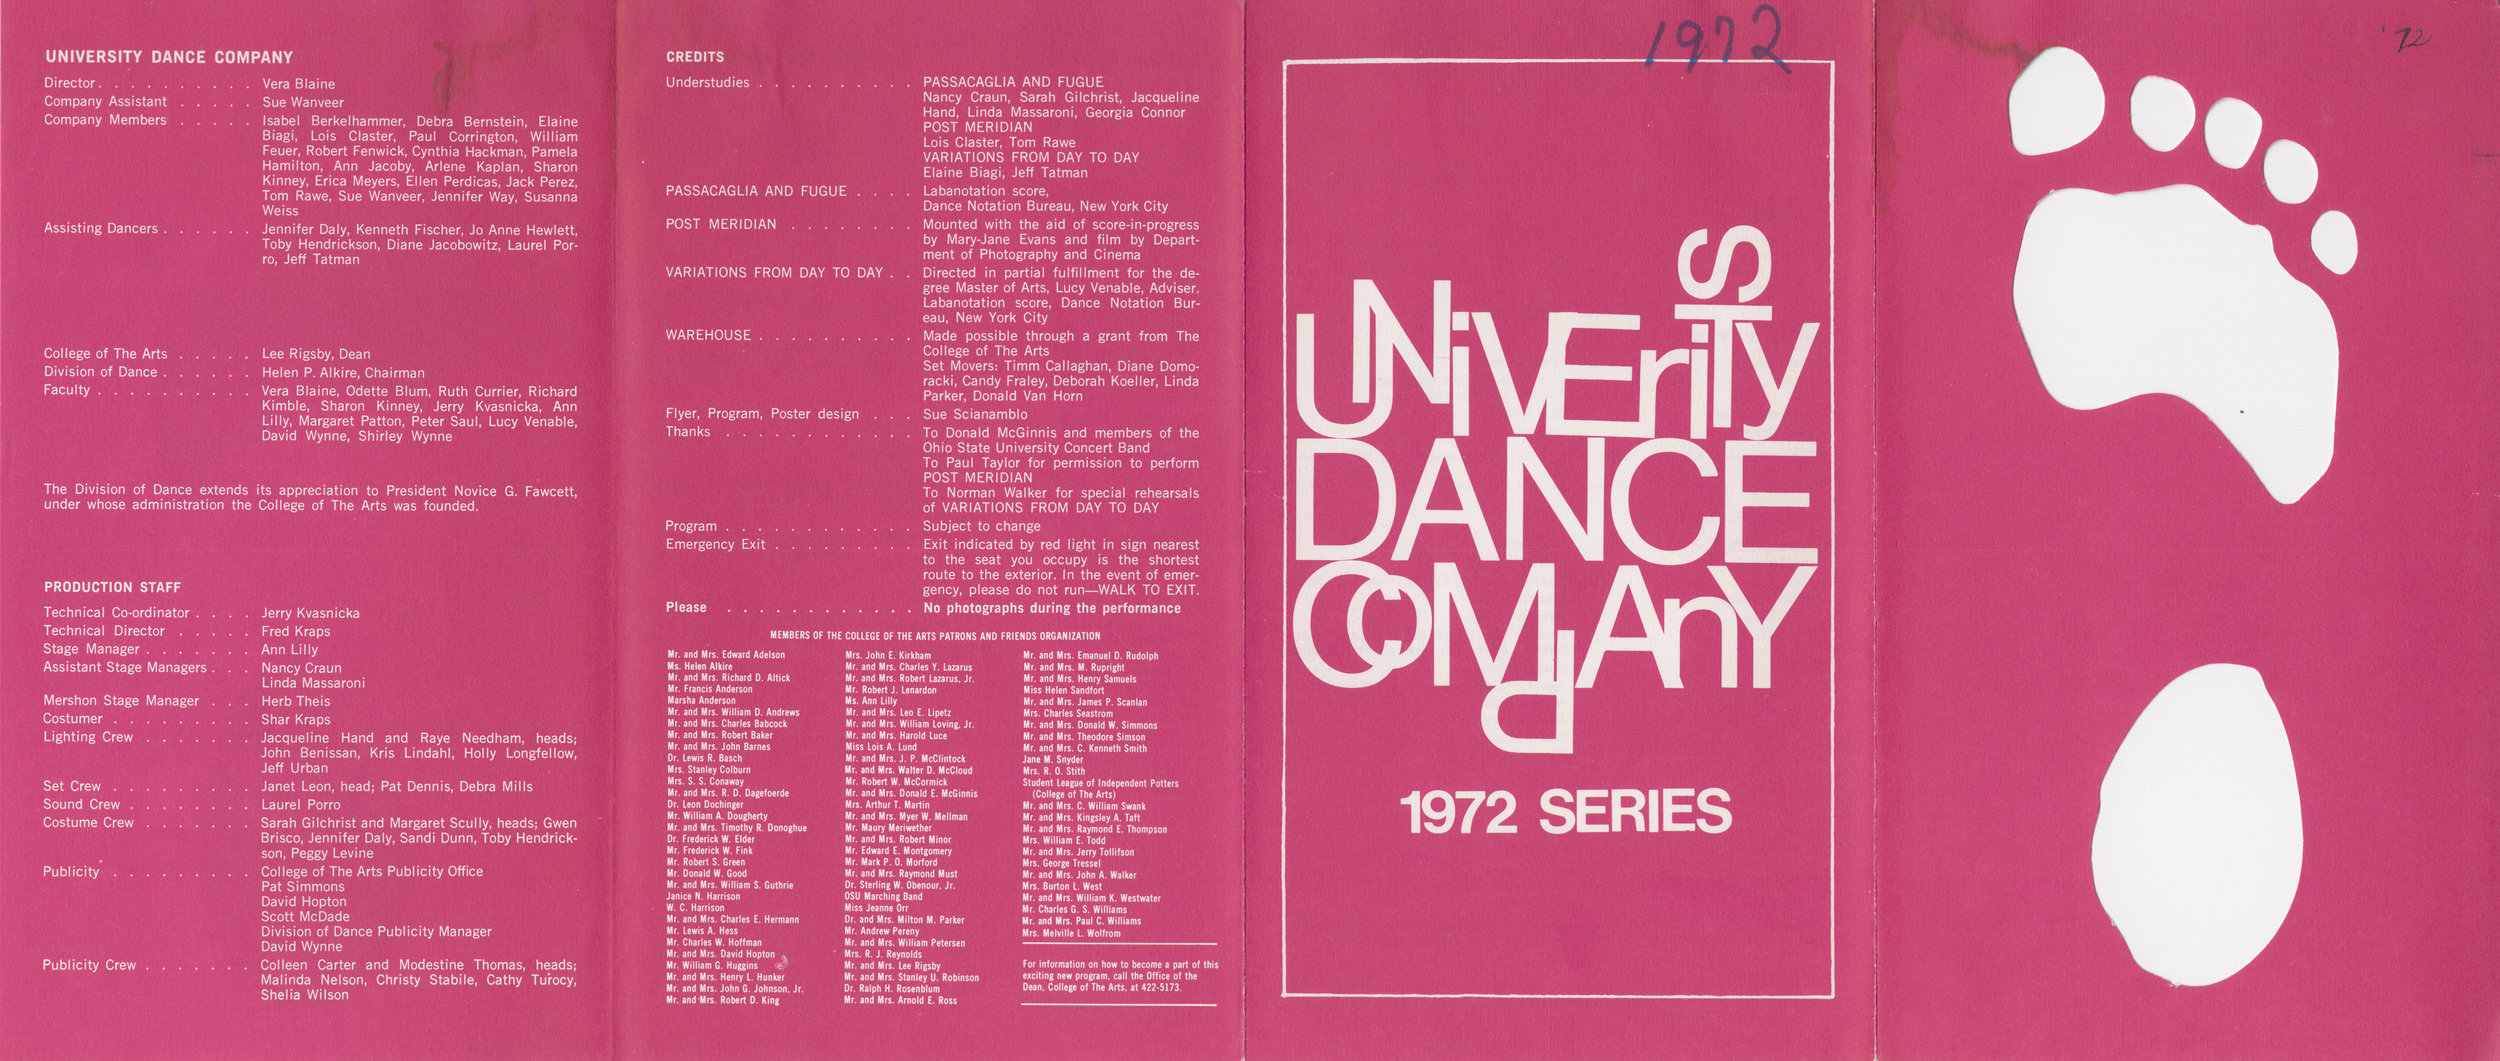 UDC_1972_DancePrograms-014-004.jpg